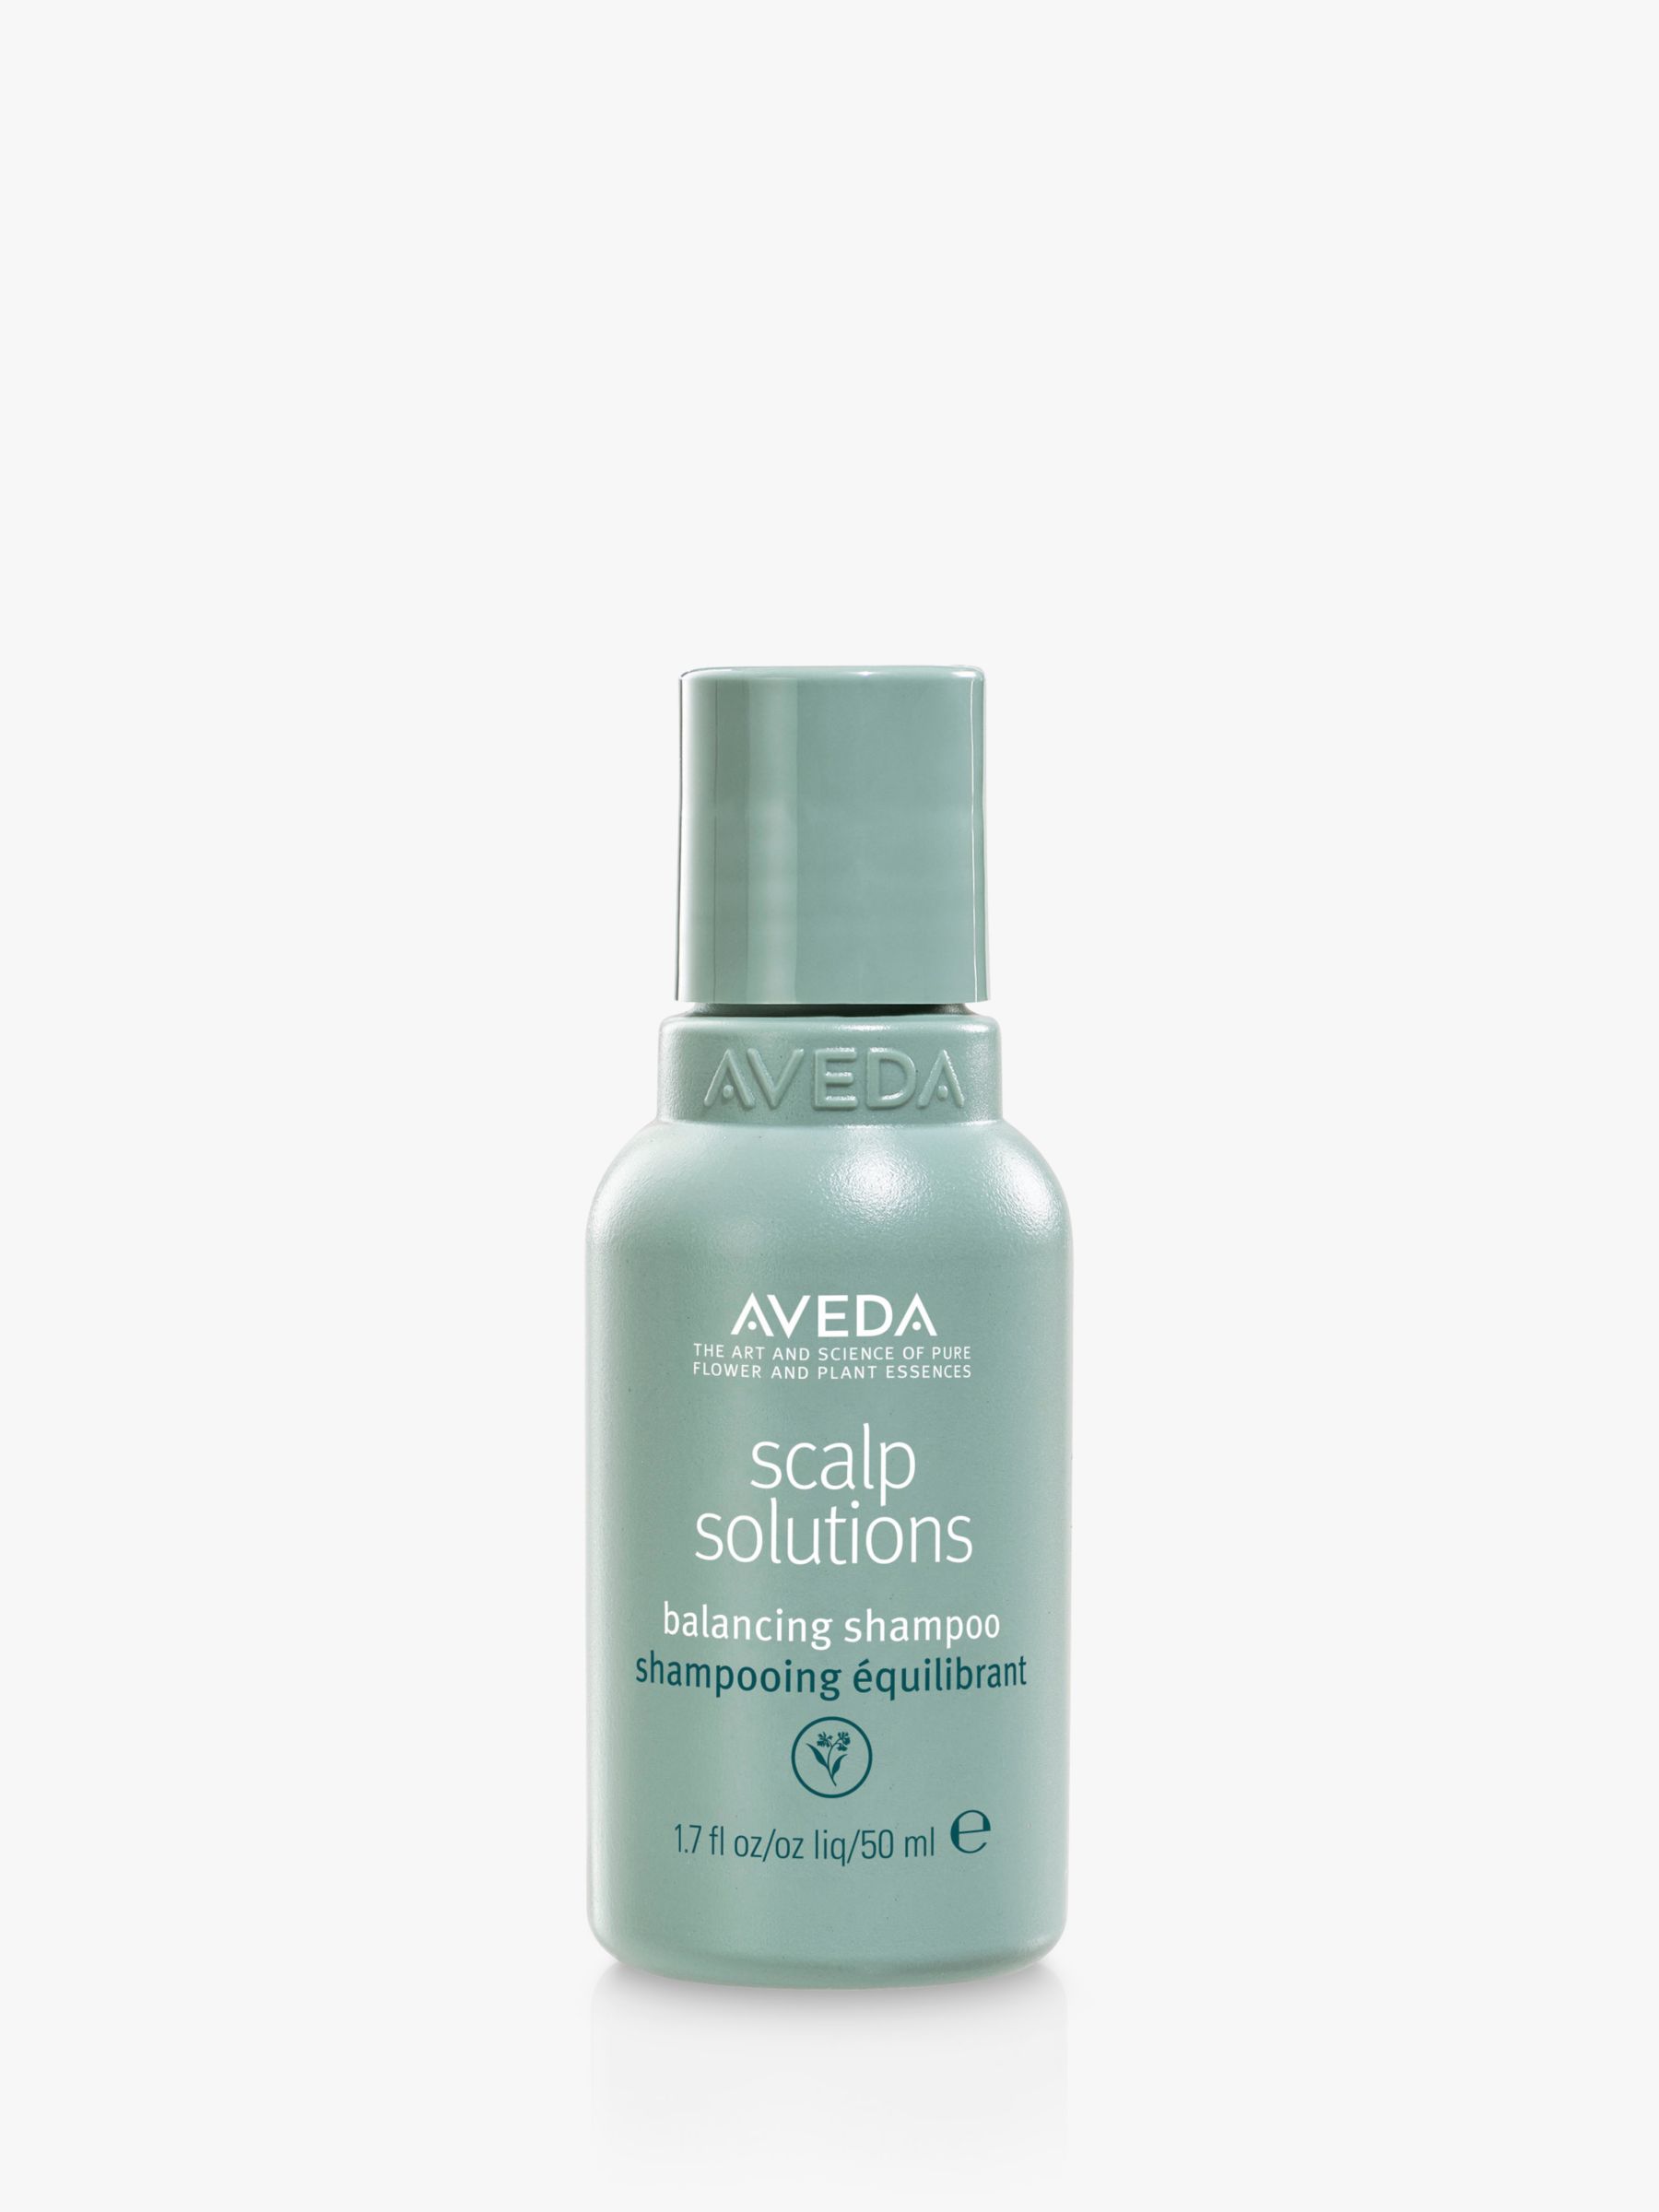 Aveda Scalp Solutions Balancing Shampoo, 50ml